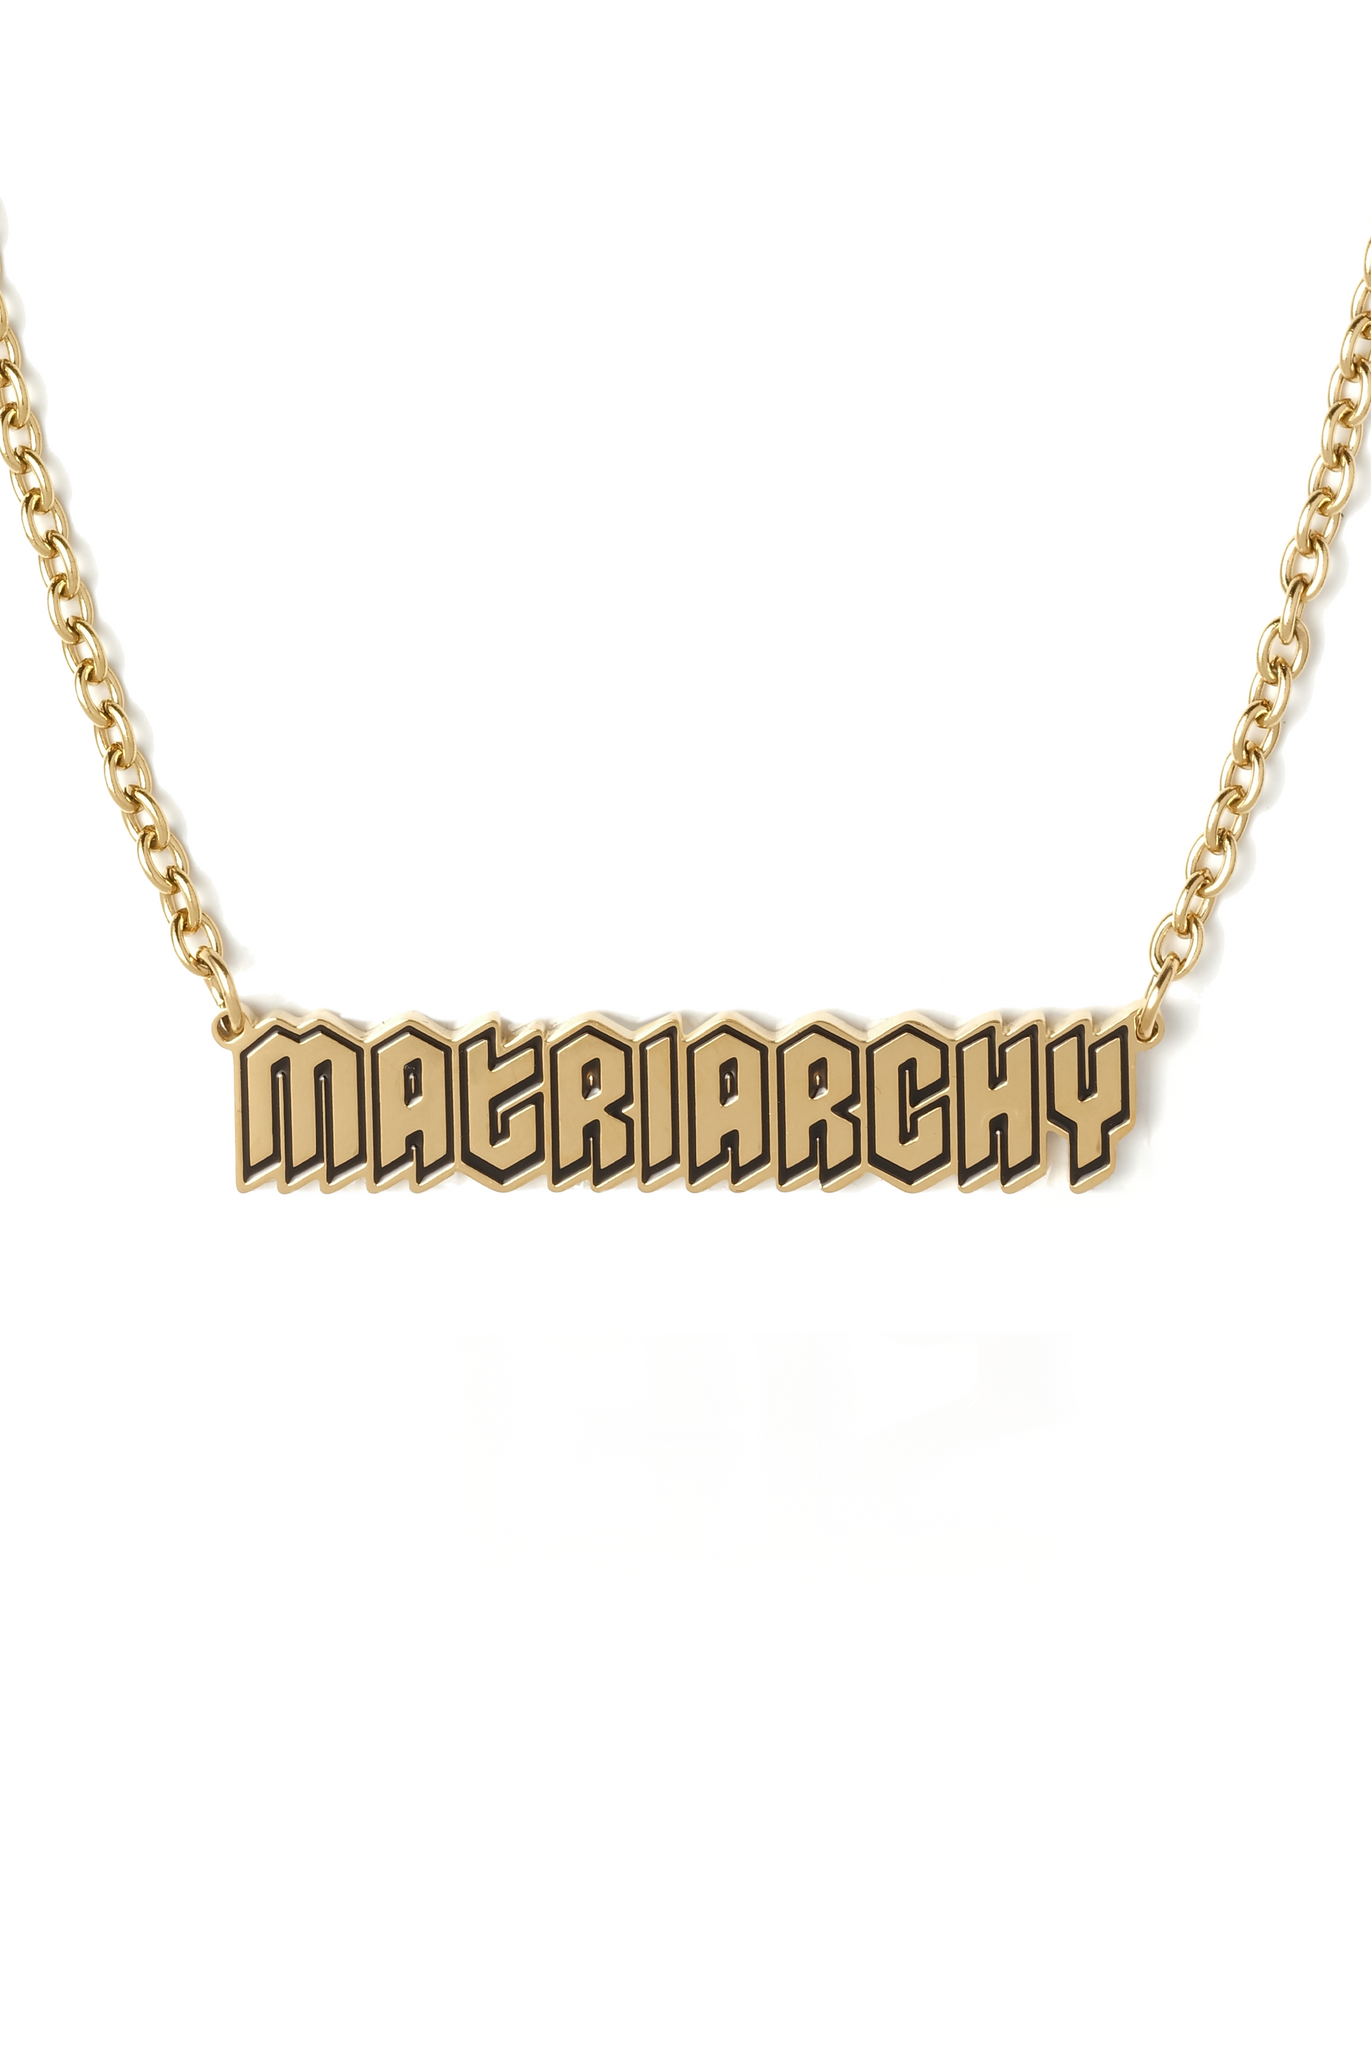 Matriarchy necklace